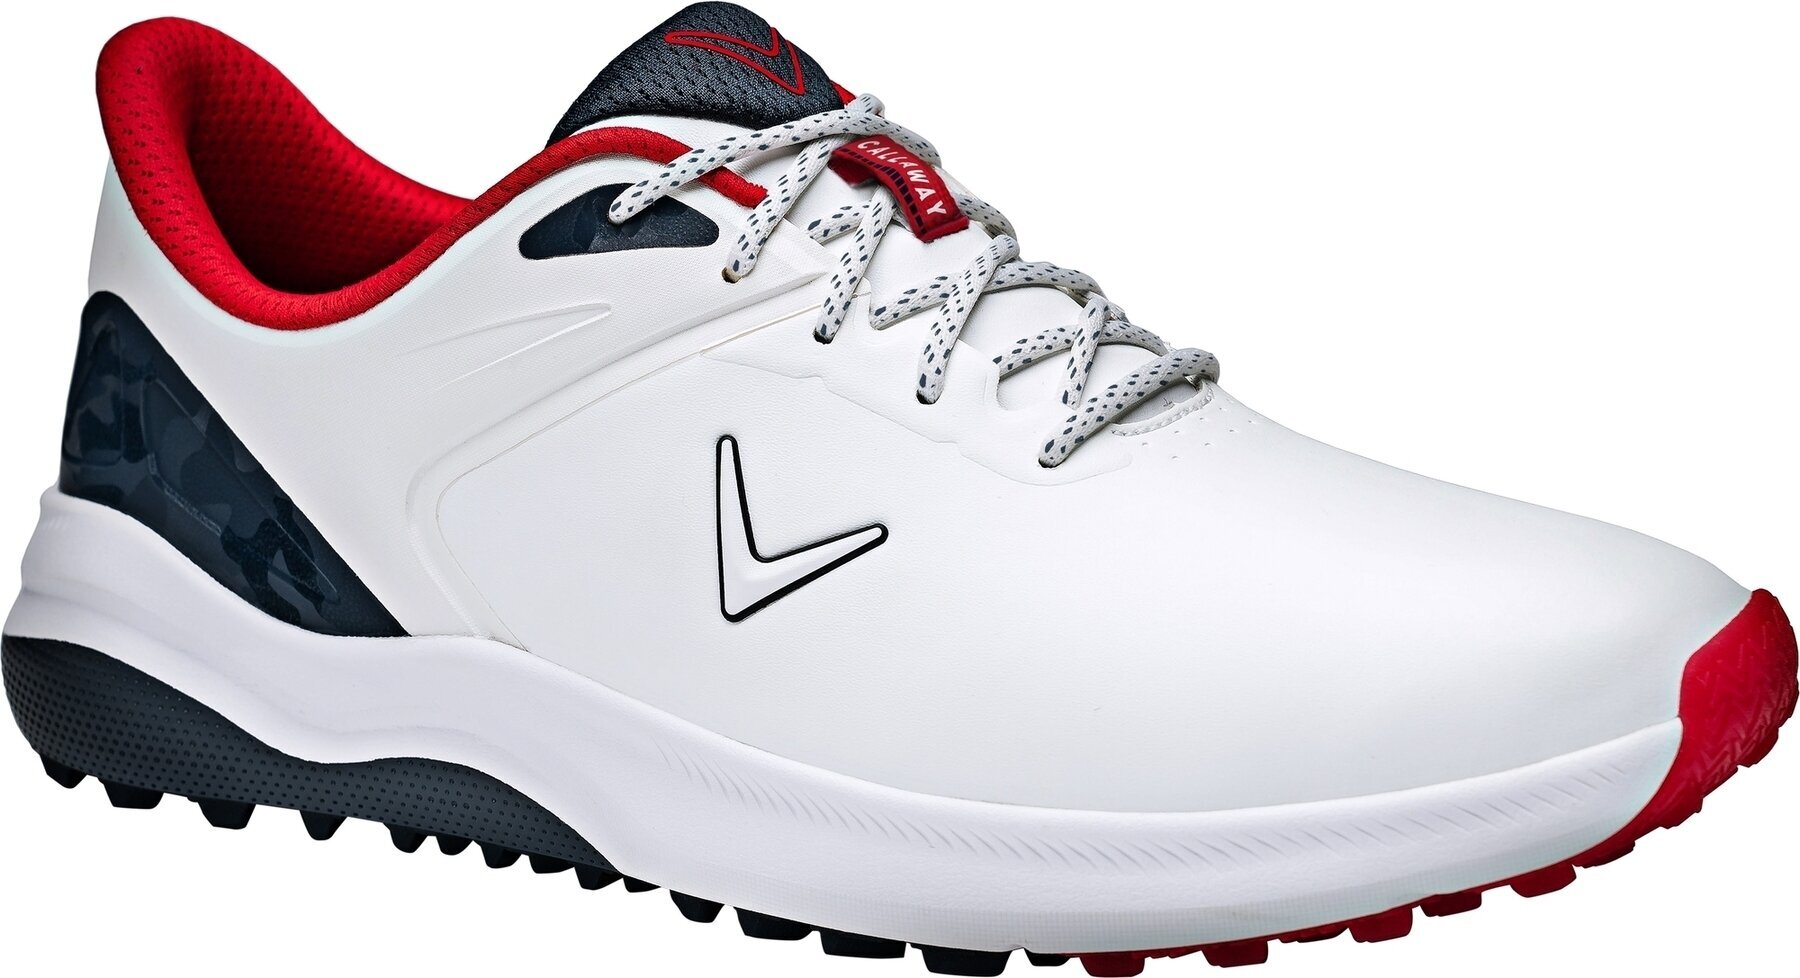 Miesten golfkengät Callaway Lazer Mens Golf Shoes White/Navy/Red 42,5